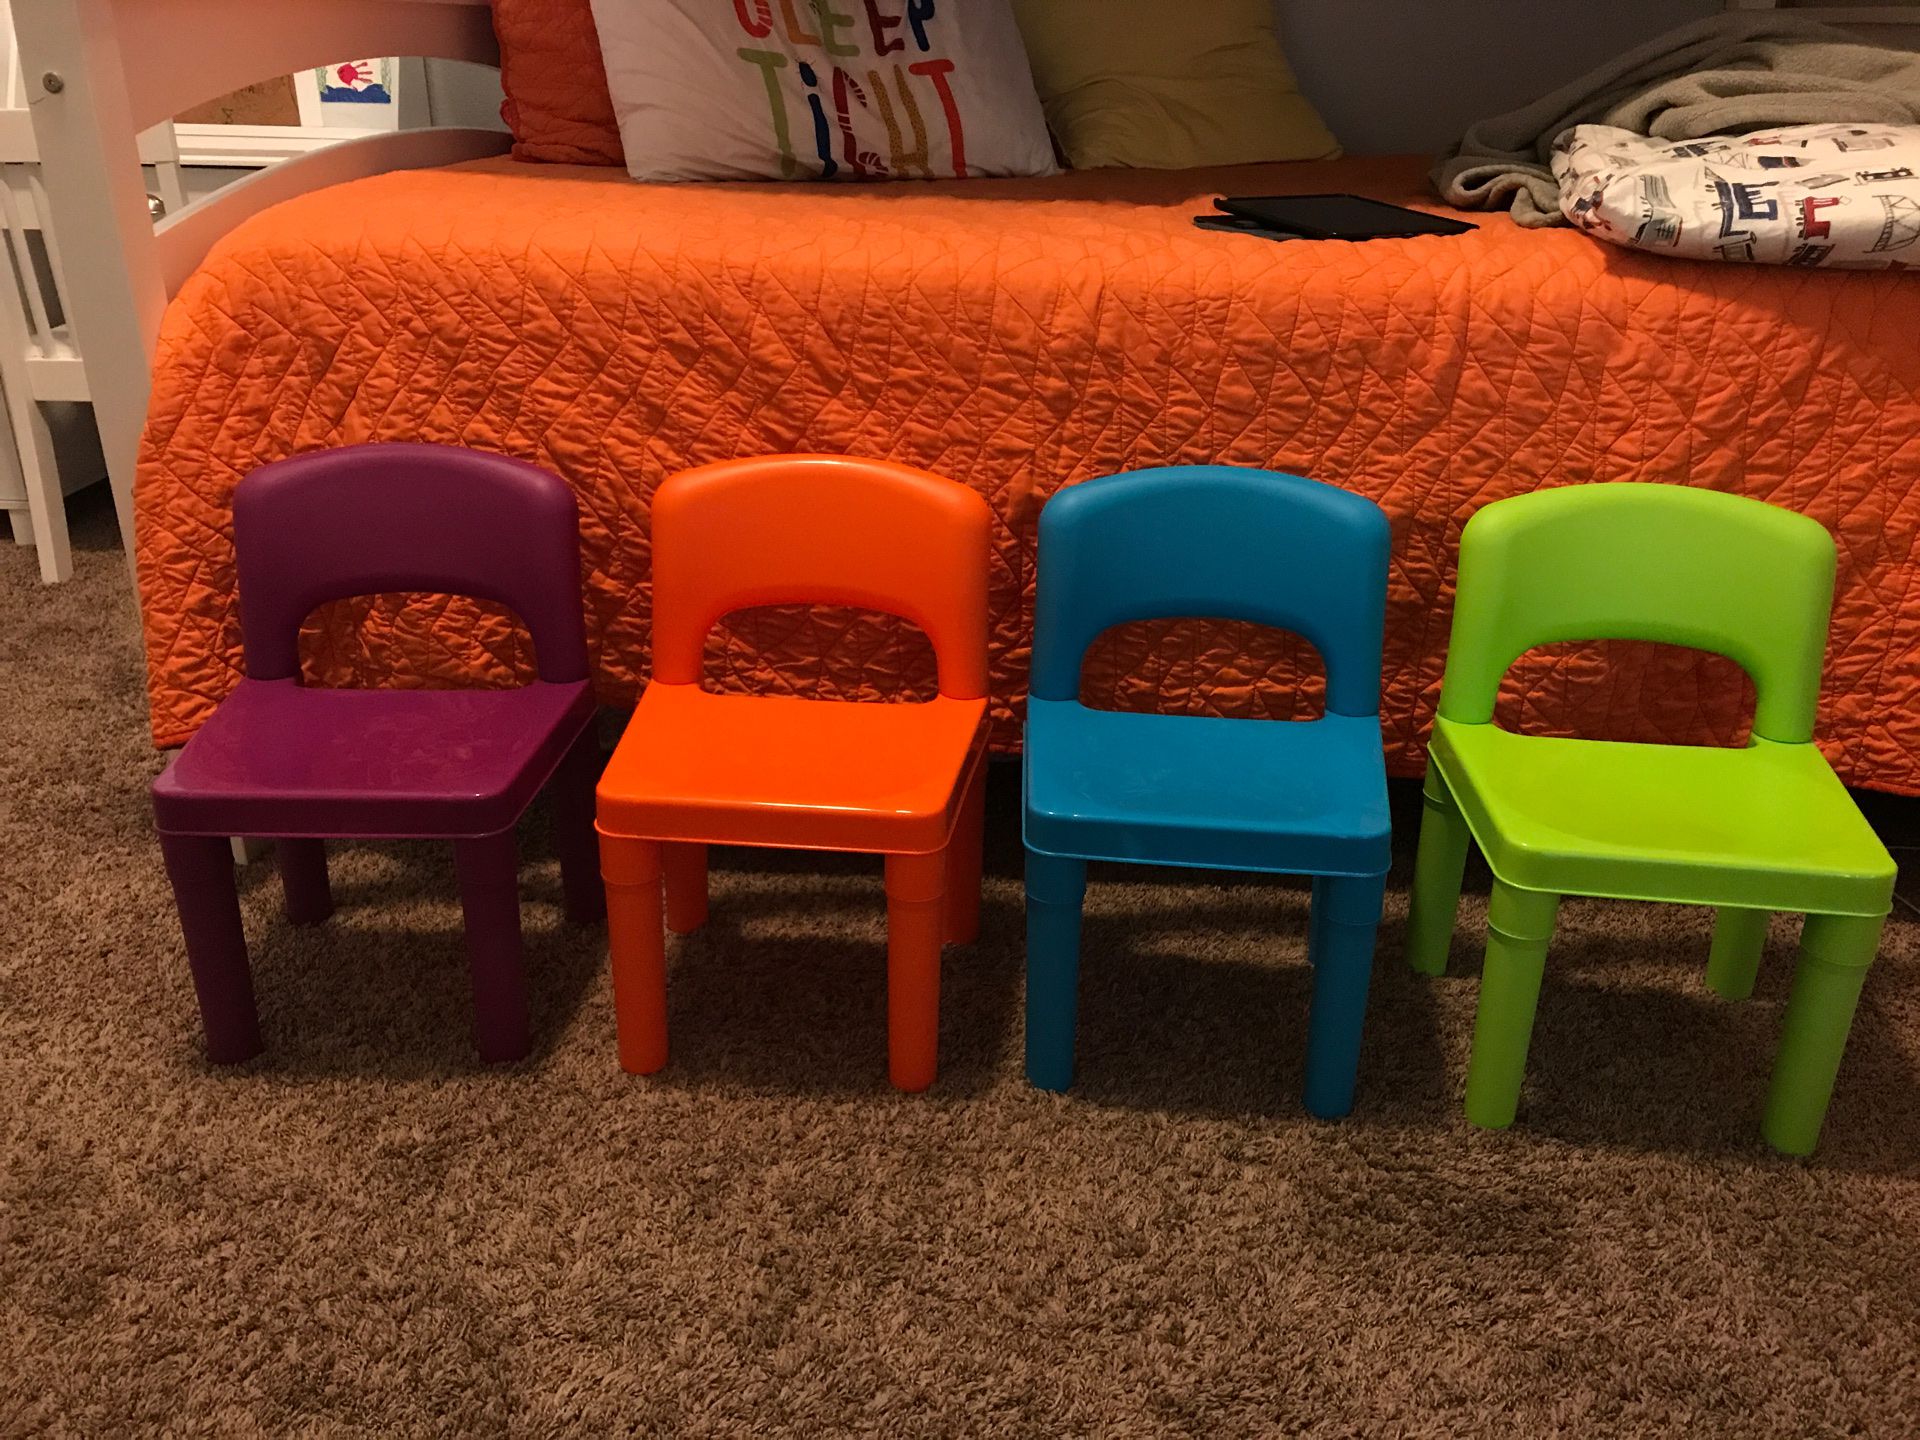 Plastic kid’s chairs